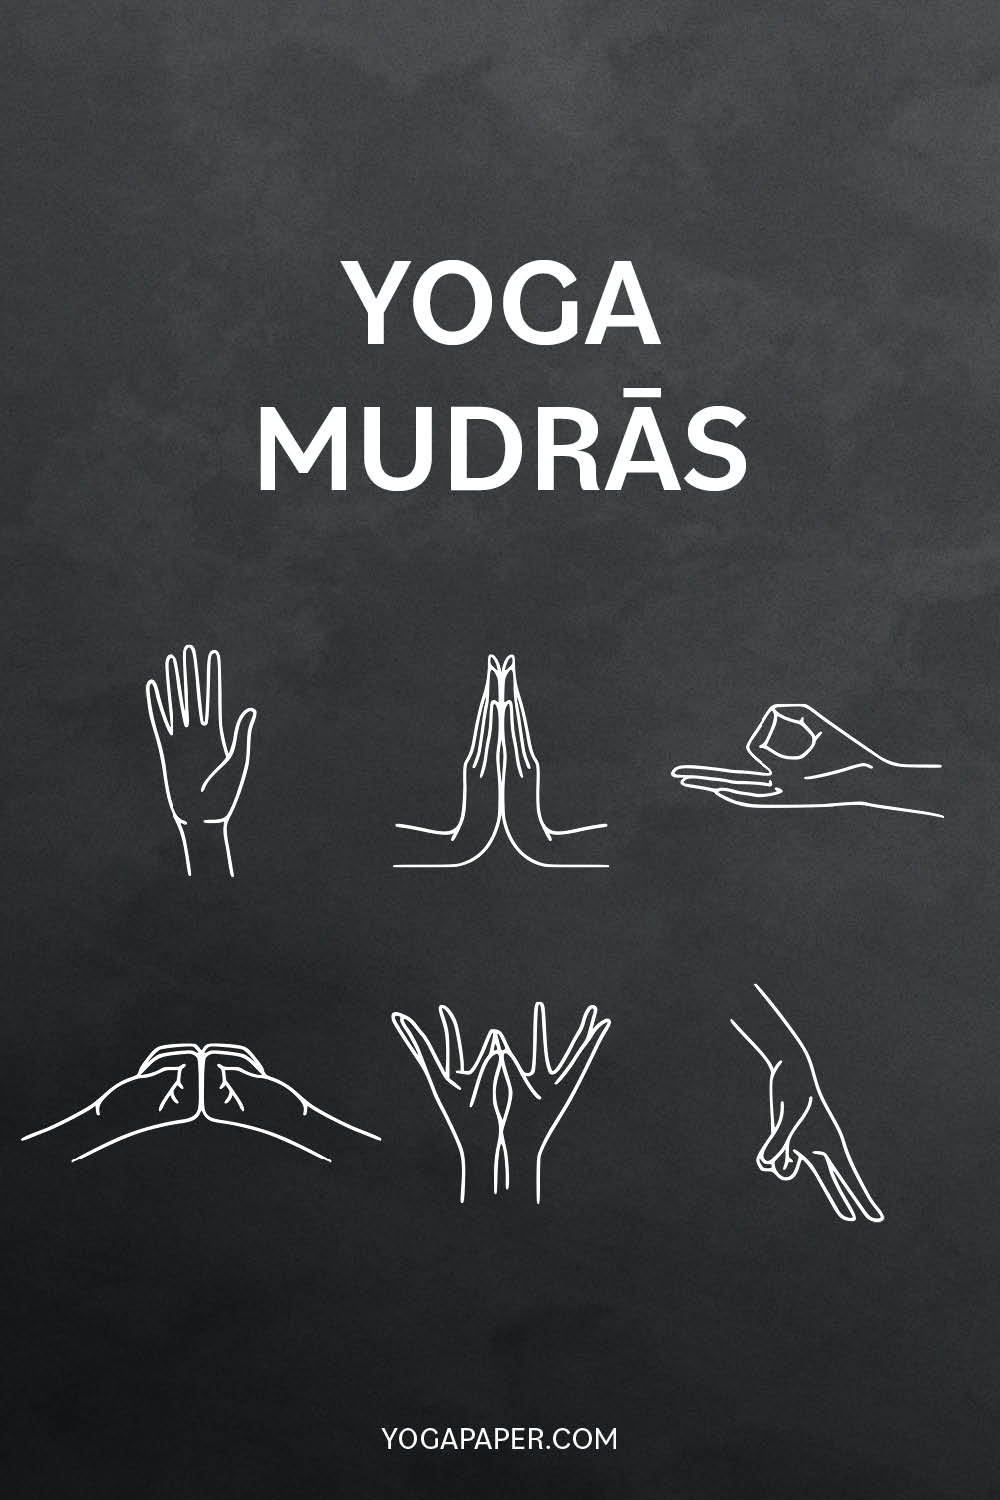 Yoga Mudras with simple illustrations